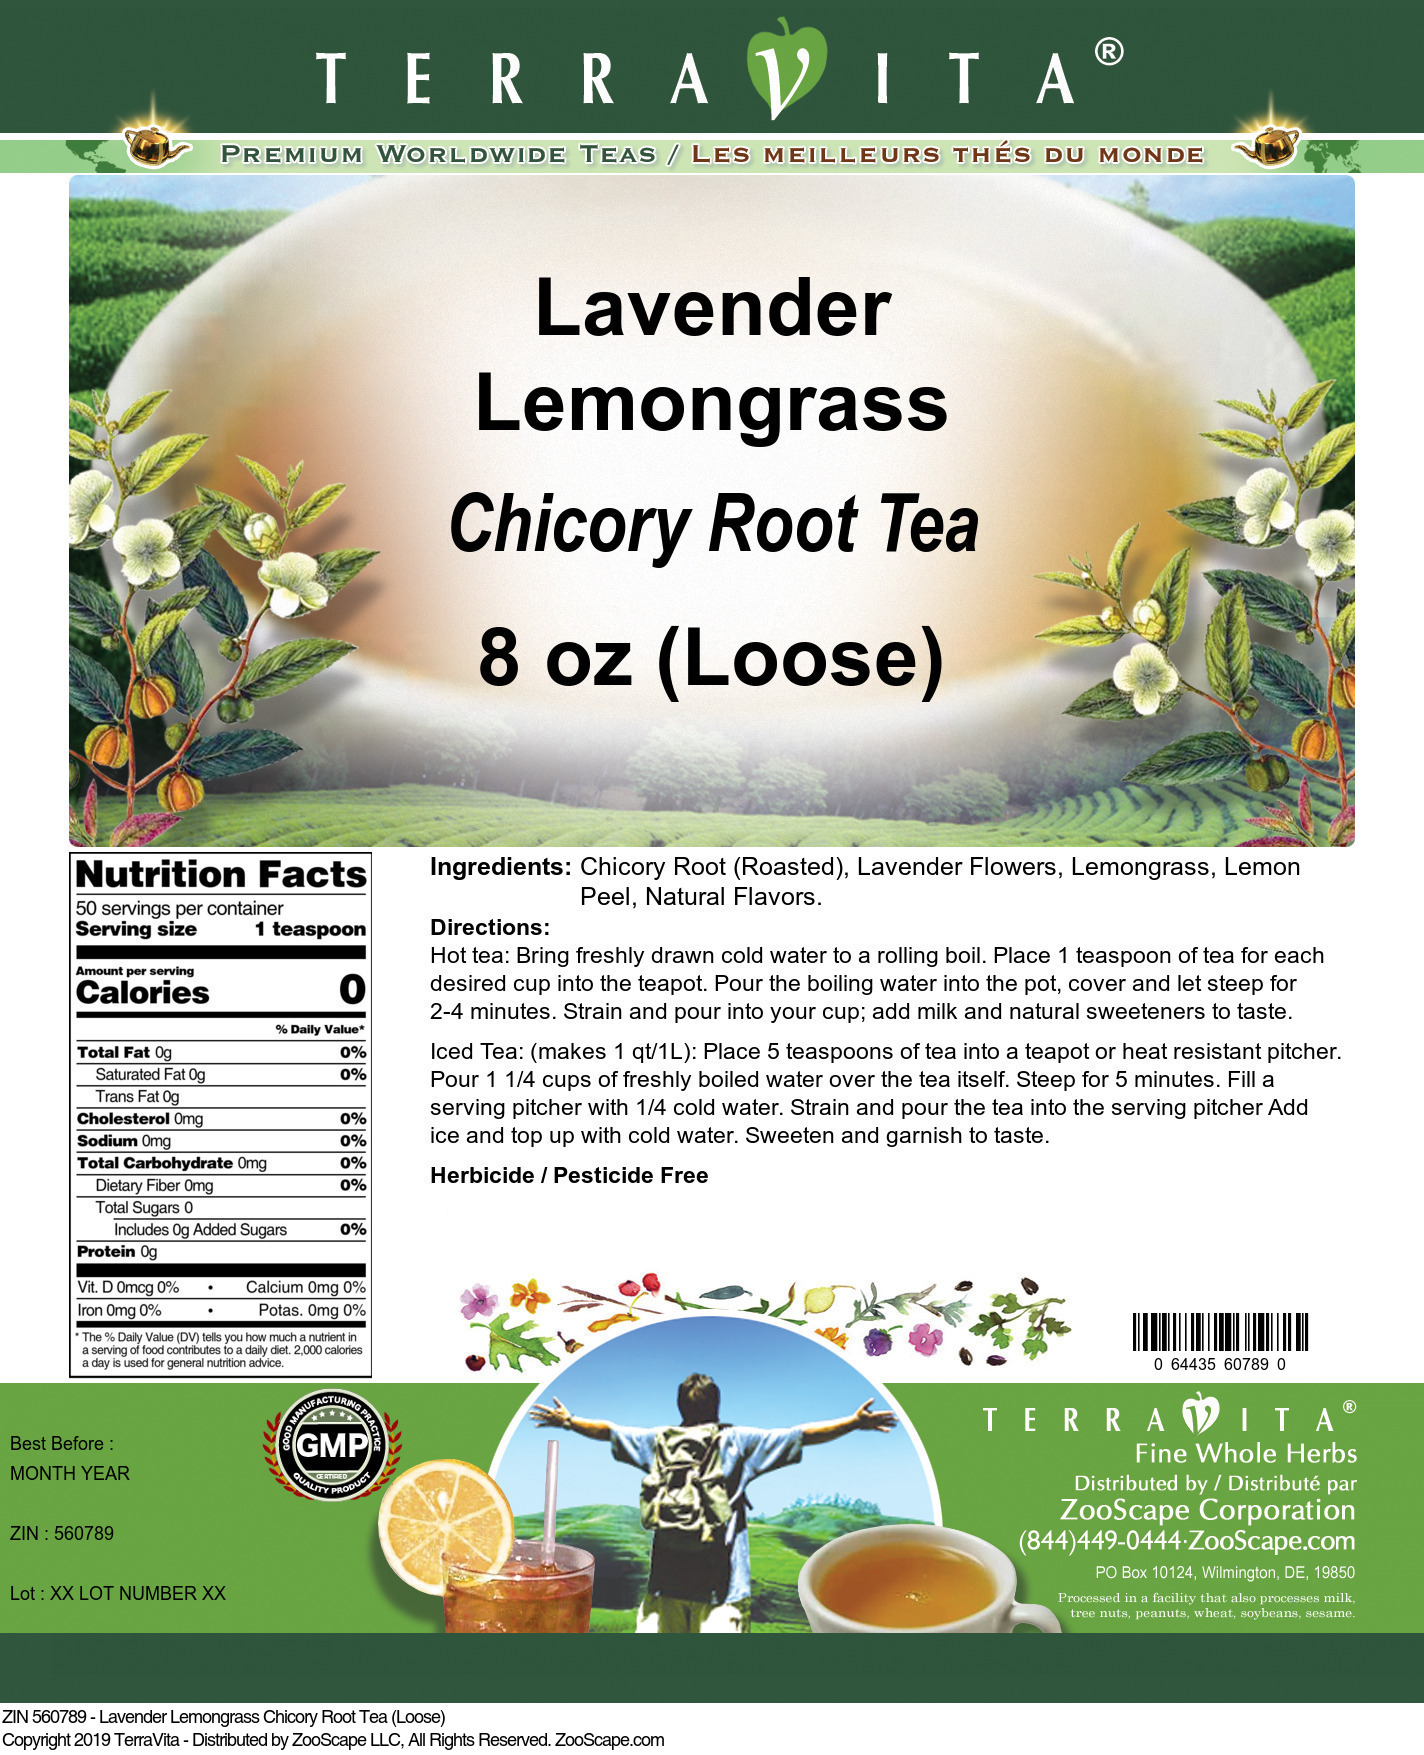 Lavender Lemongrass Chicory Root Tea (Loose) - Label